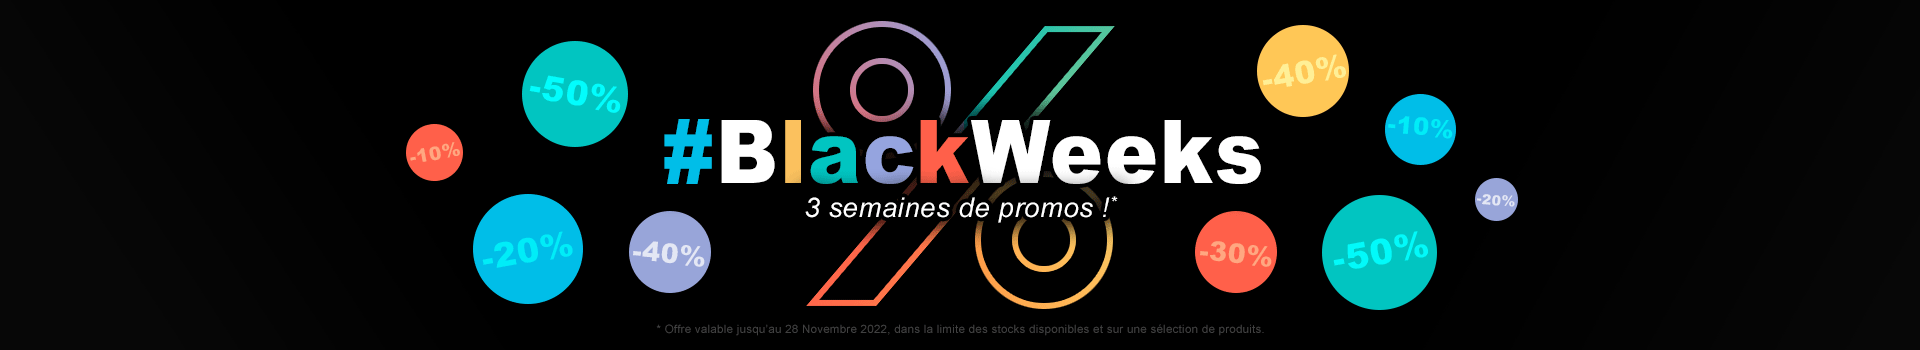 blackweek promotion alarme et videosurveillance